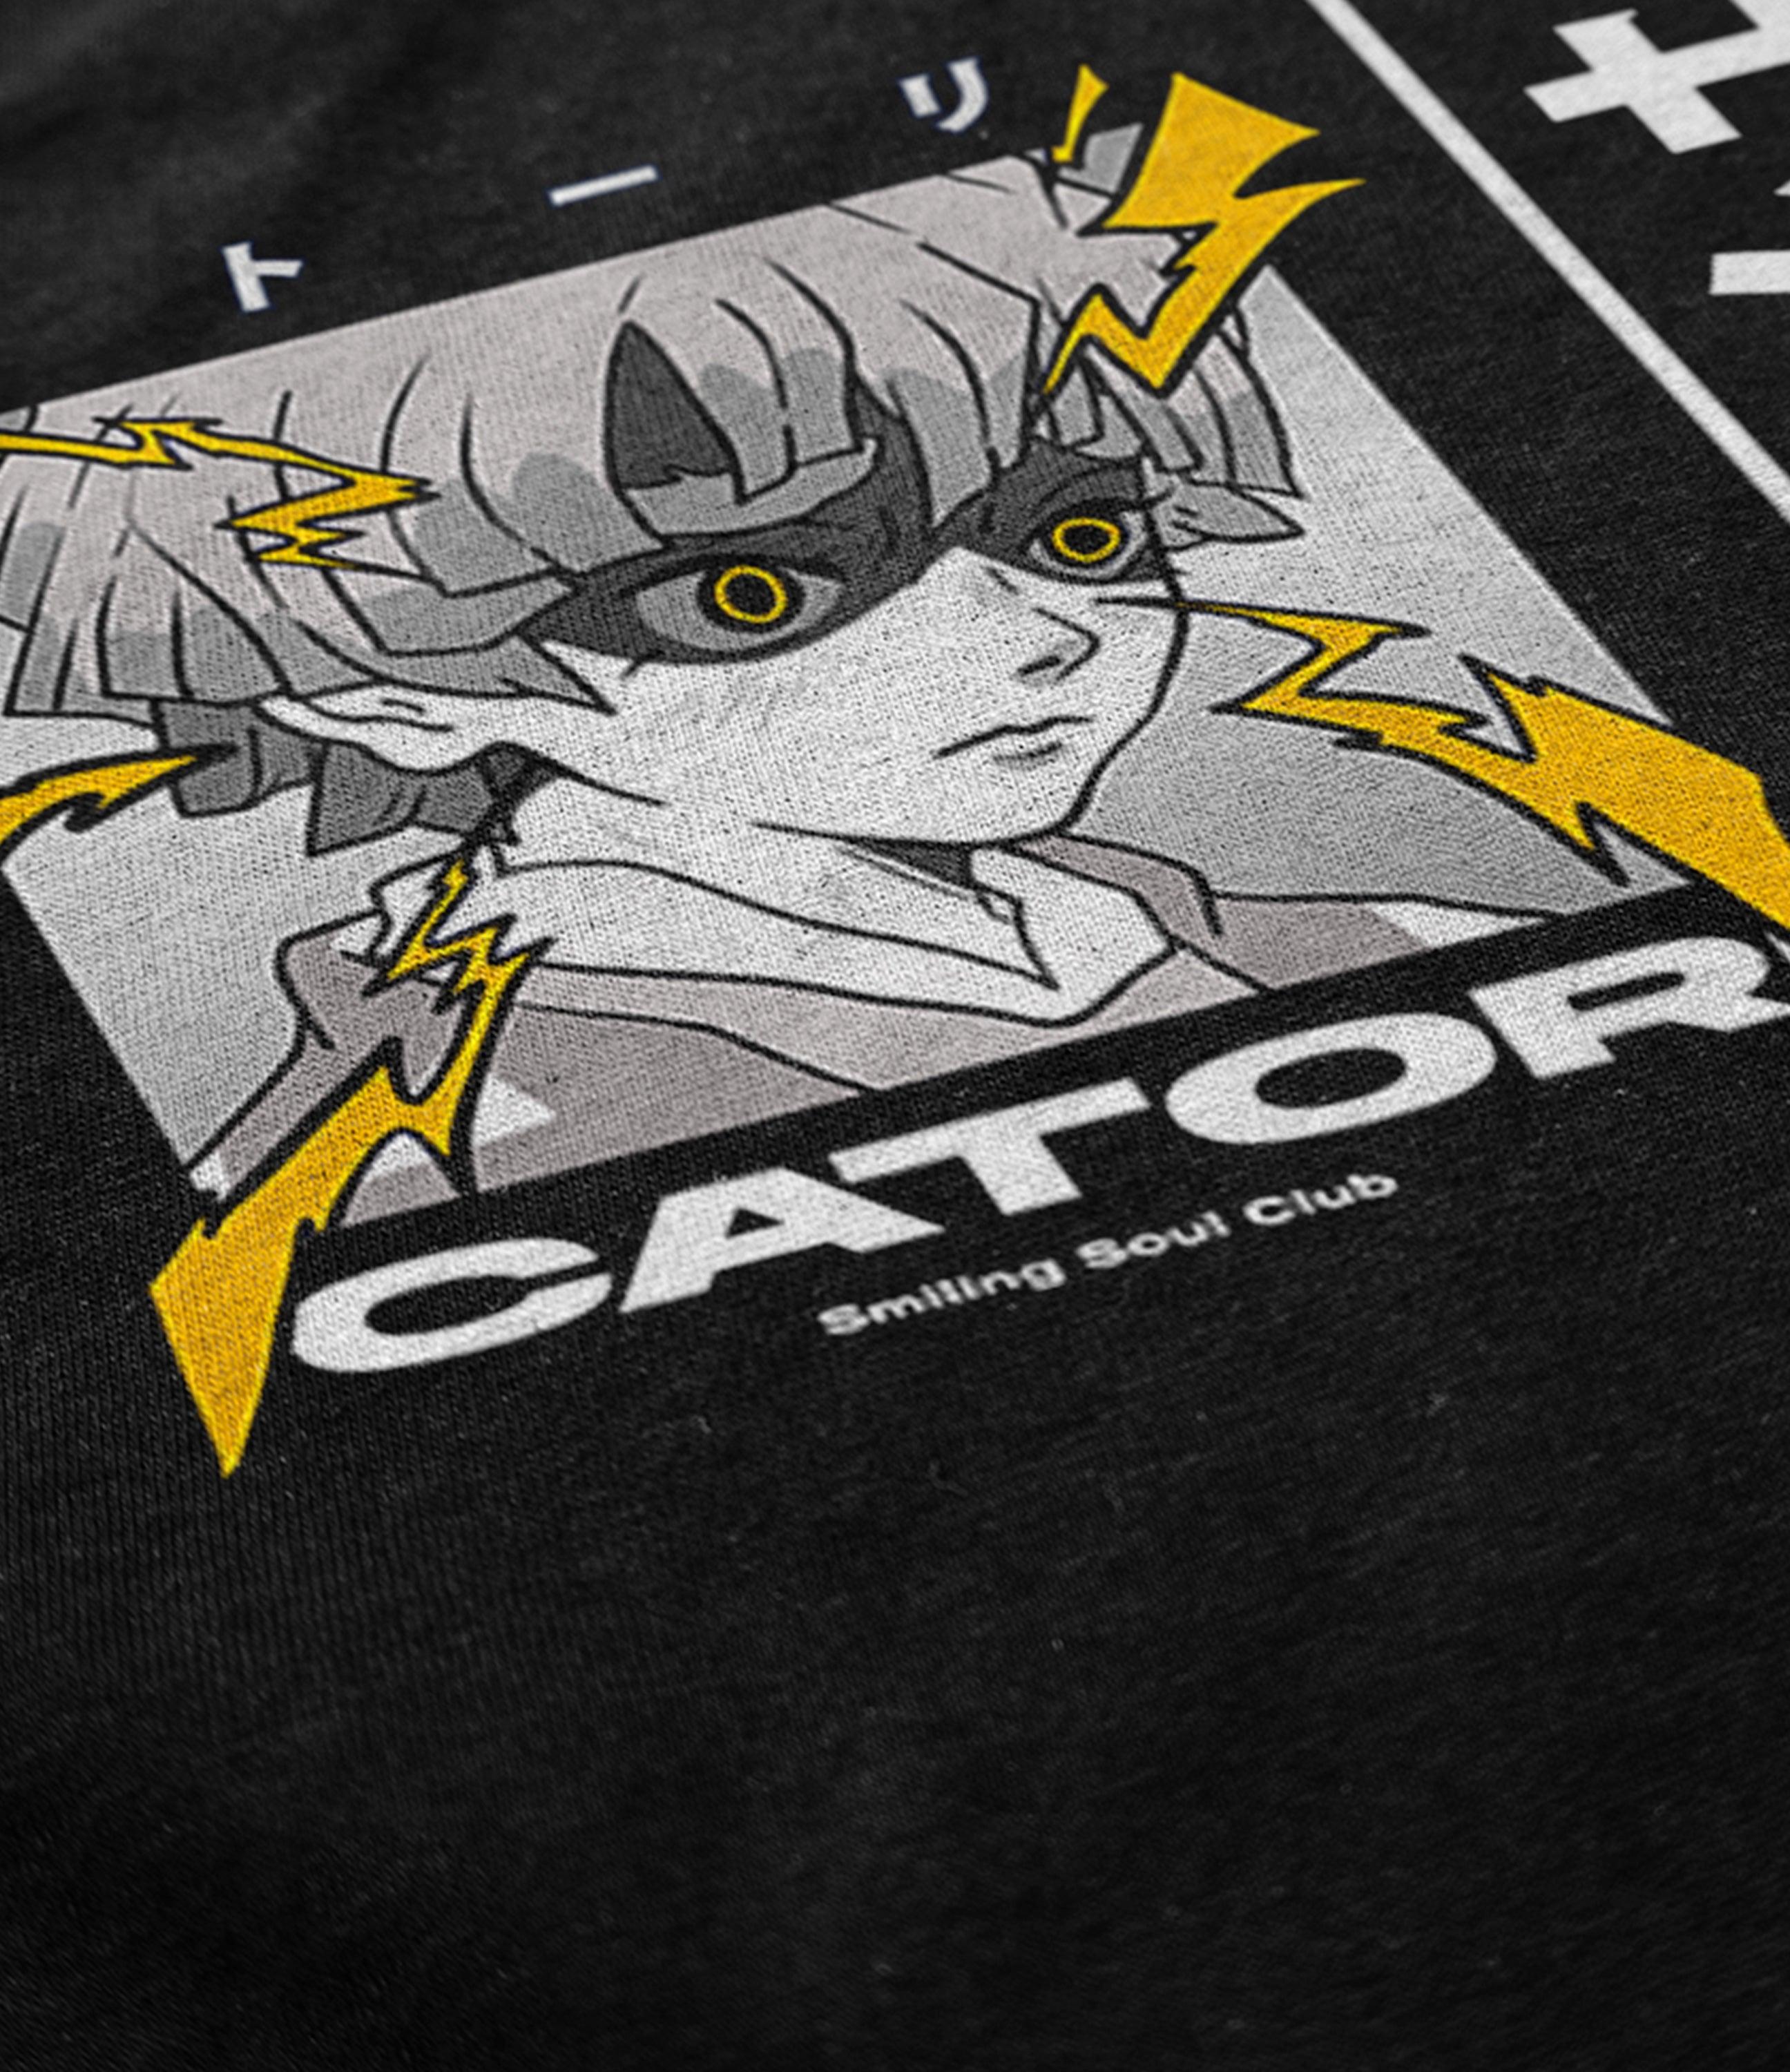 Lightning T-Shirt at Catori Clothing | Graphic & Anime Tees, Hoodies & Sweatshirts 